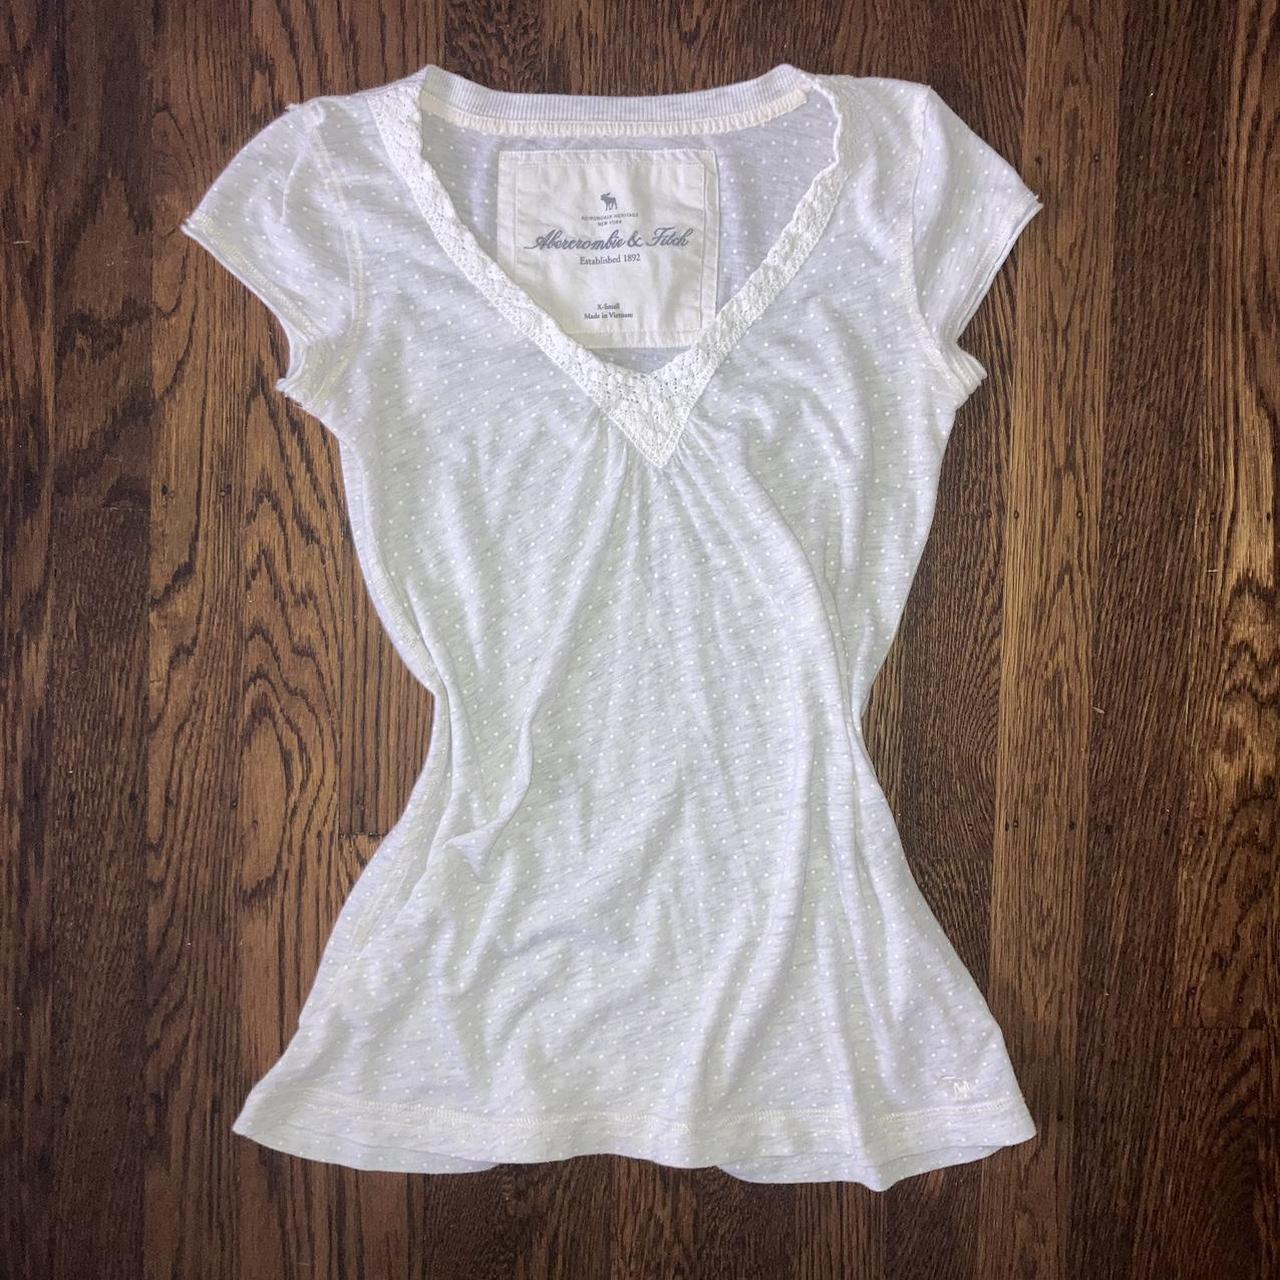 Abercrombie & Fitch Women's White T-shirt | Depop